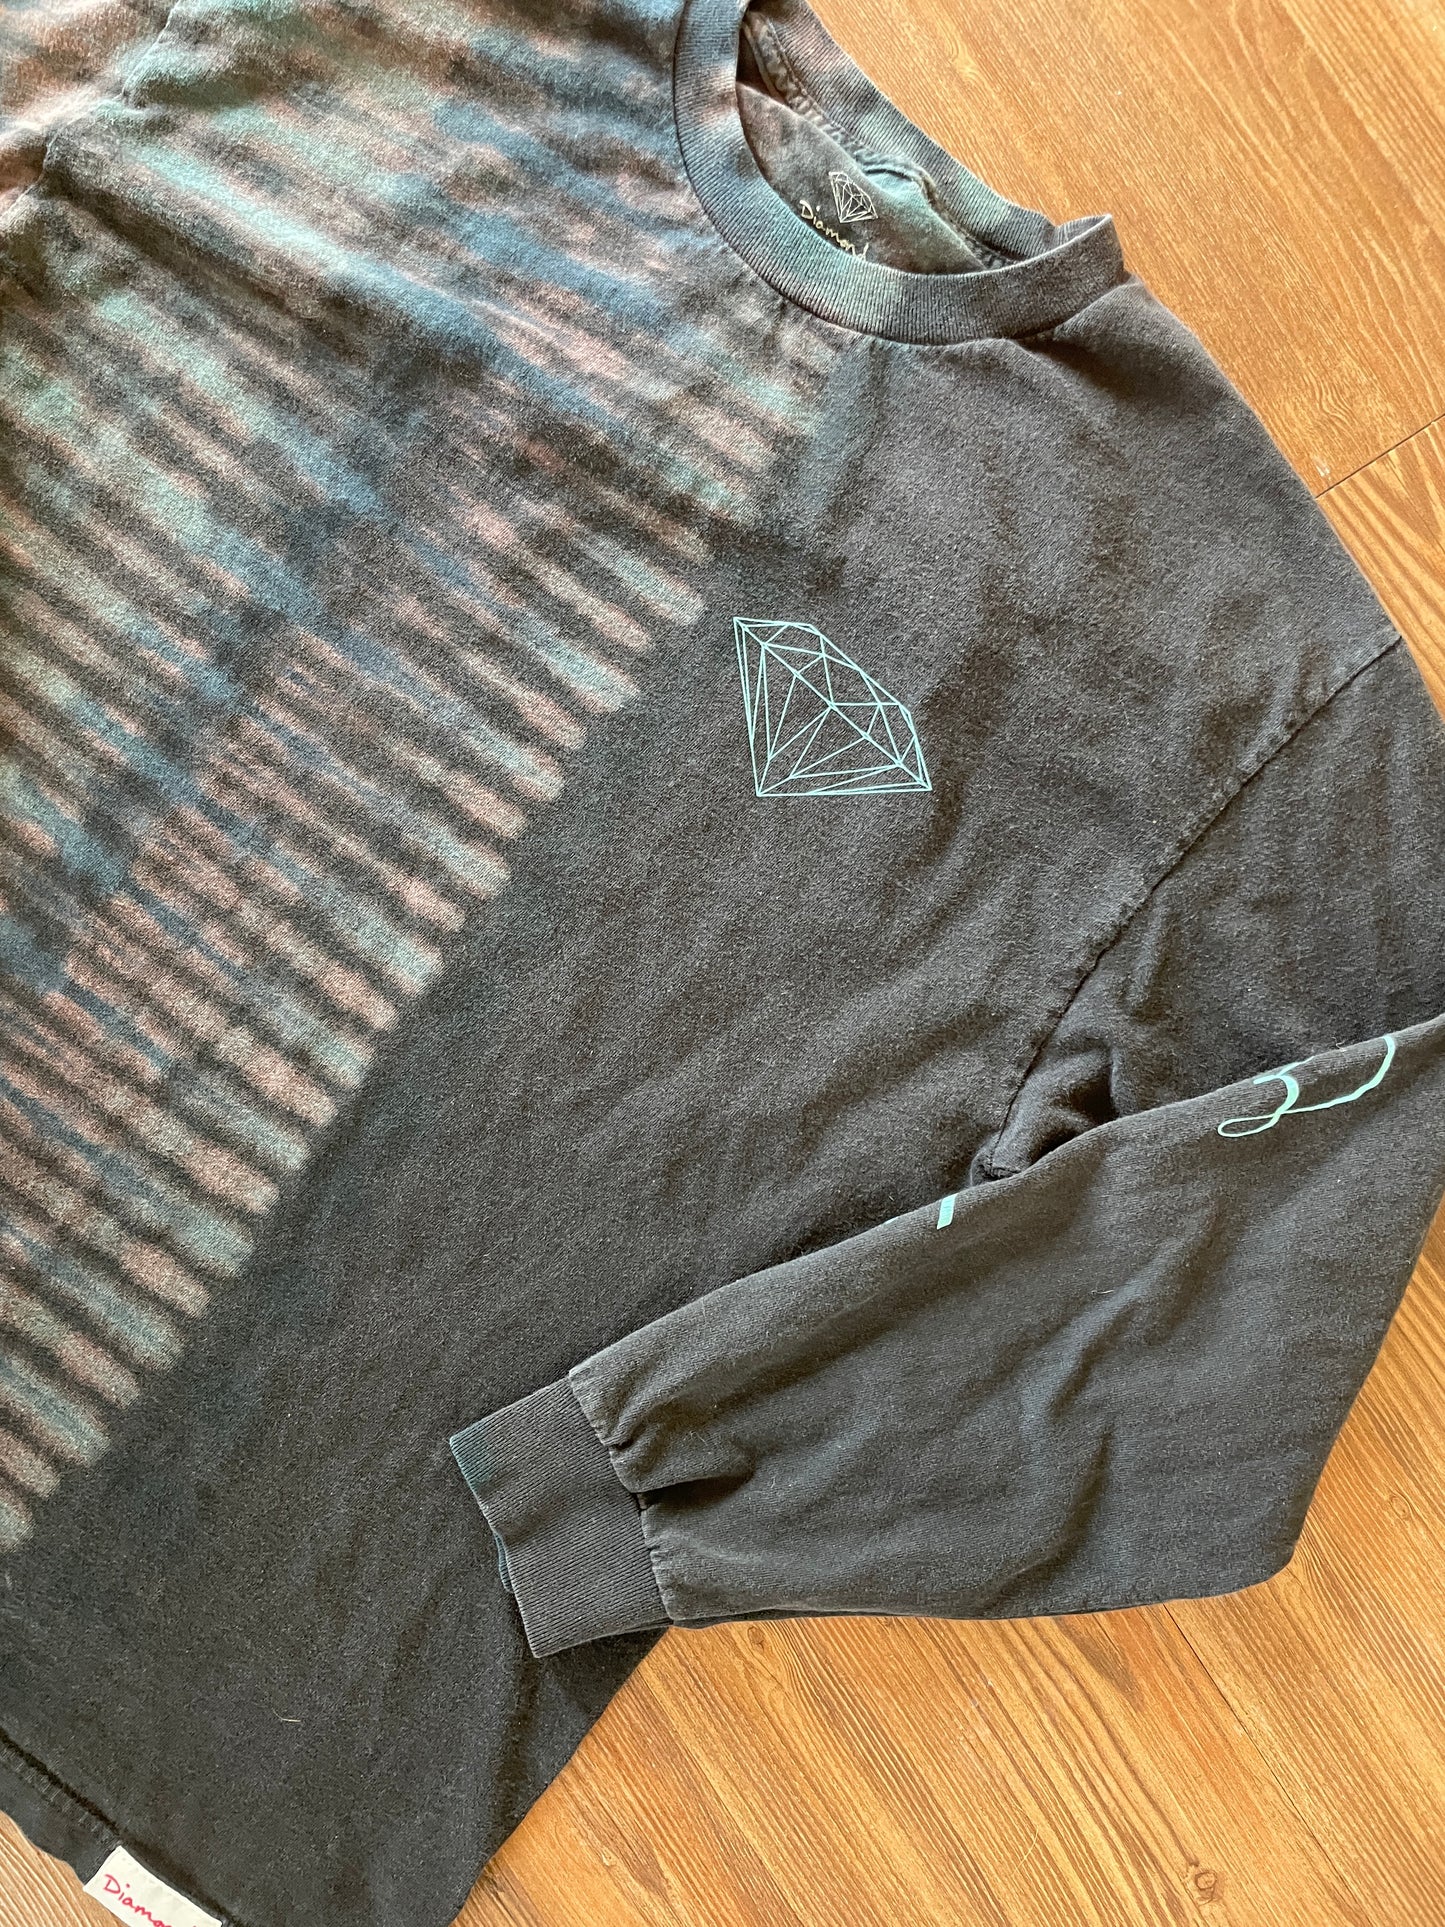 Large Men’s Utah Diamond Supply Co. Handmade Tie Dye T-Shirt | Black and Blue Pleated Tie Dye Long Sleeve